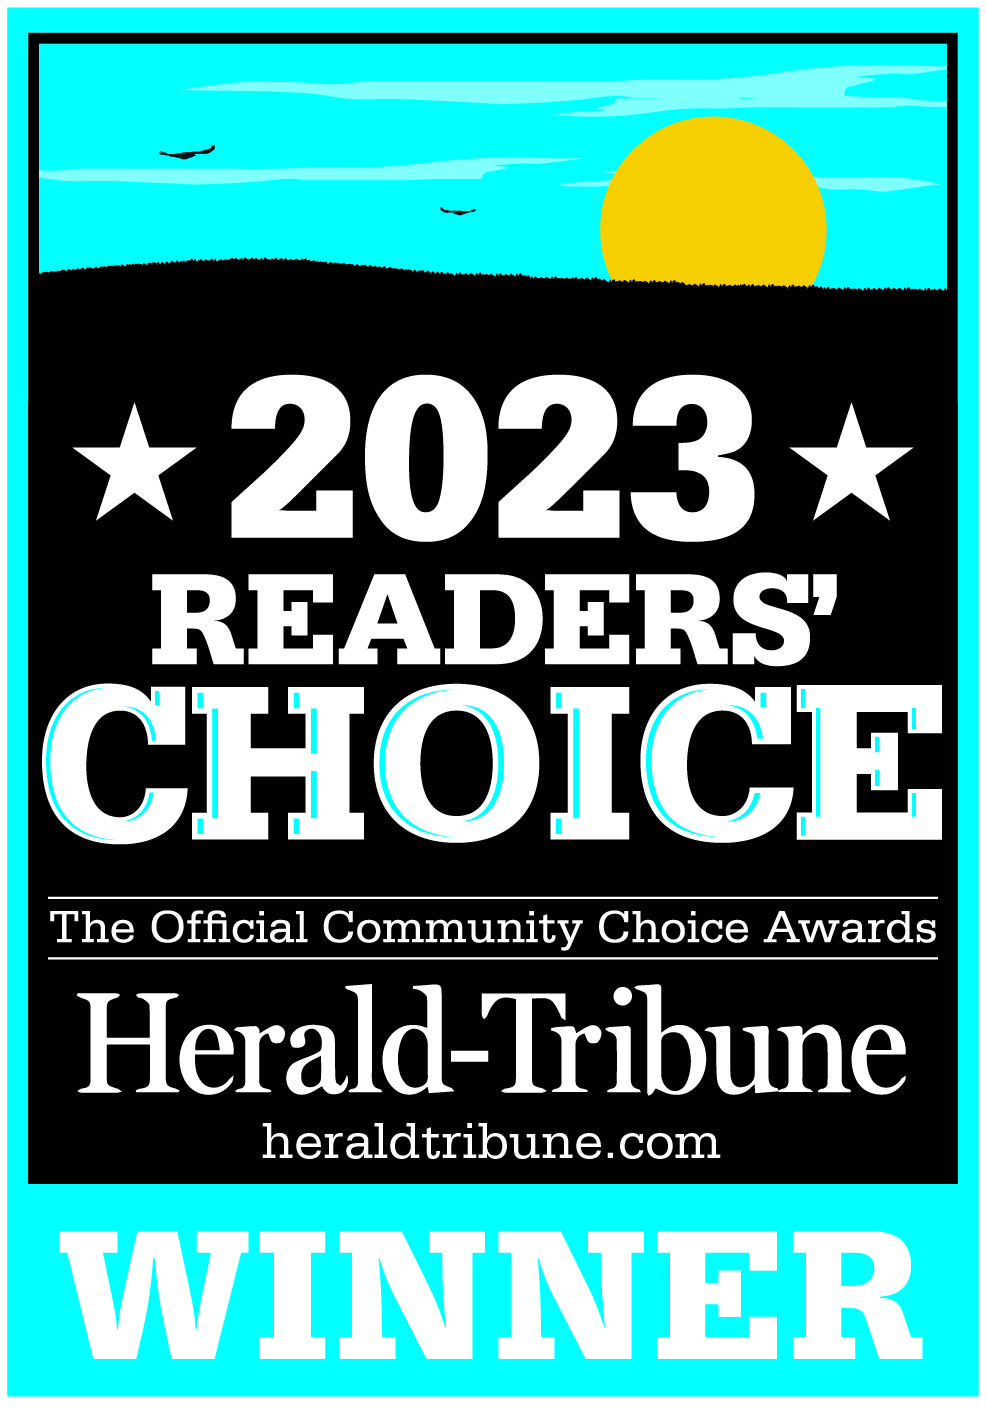 2023 Readers Choice winner, Herald Tribune winner 2023